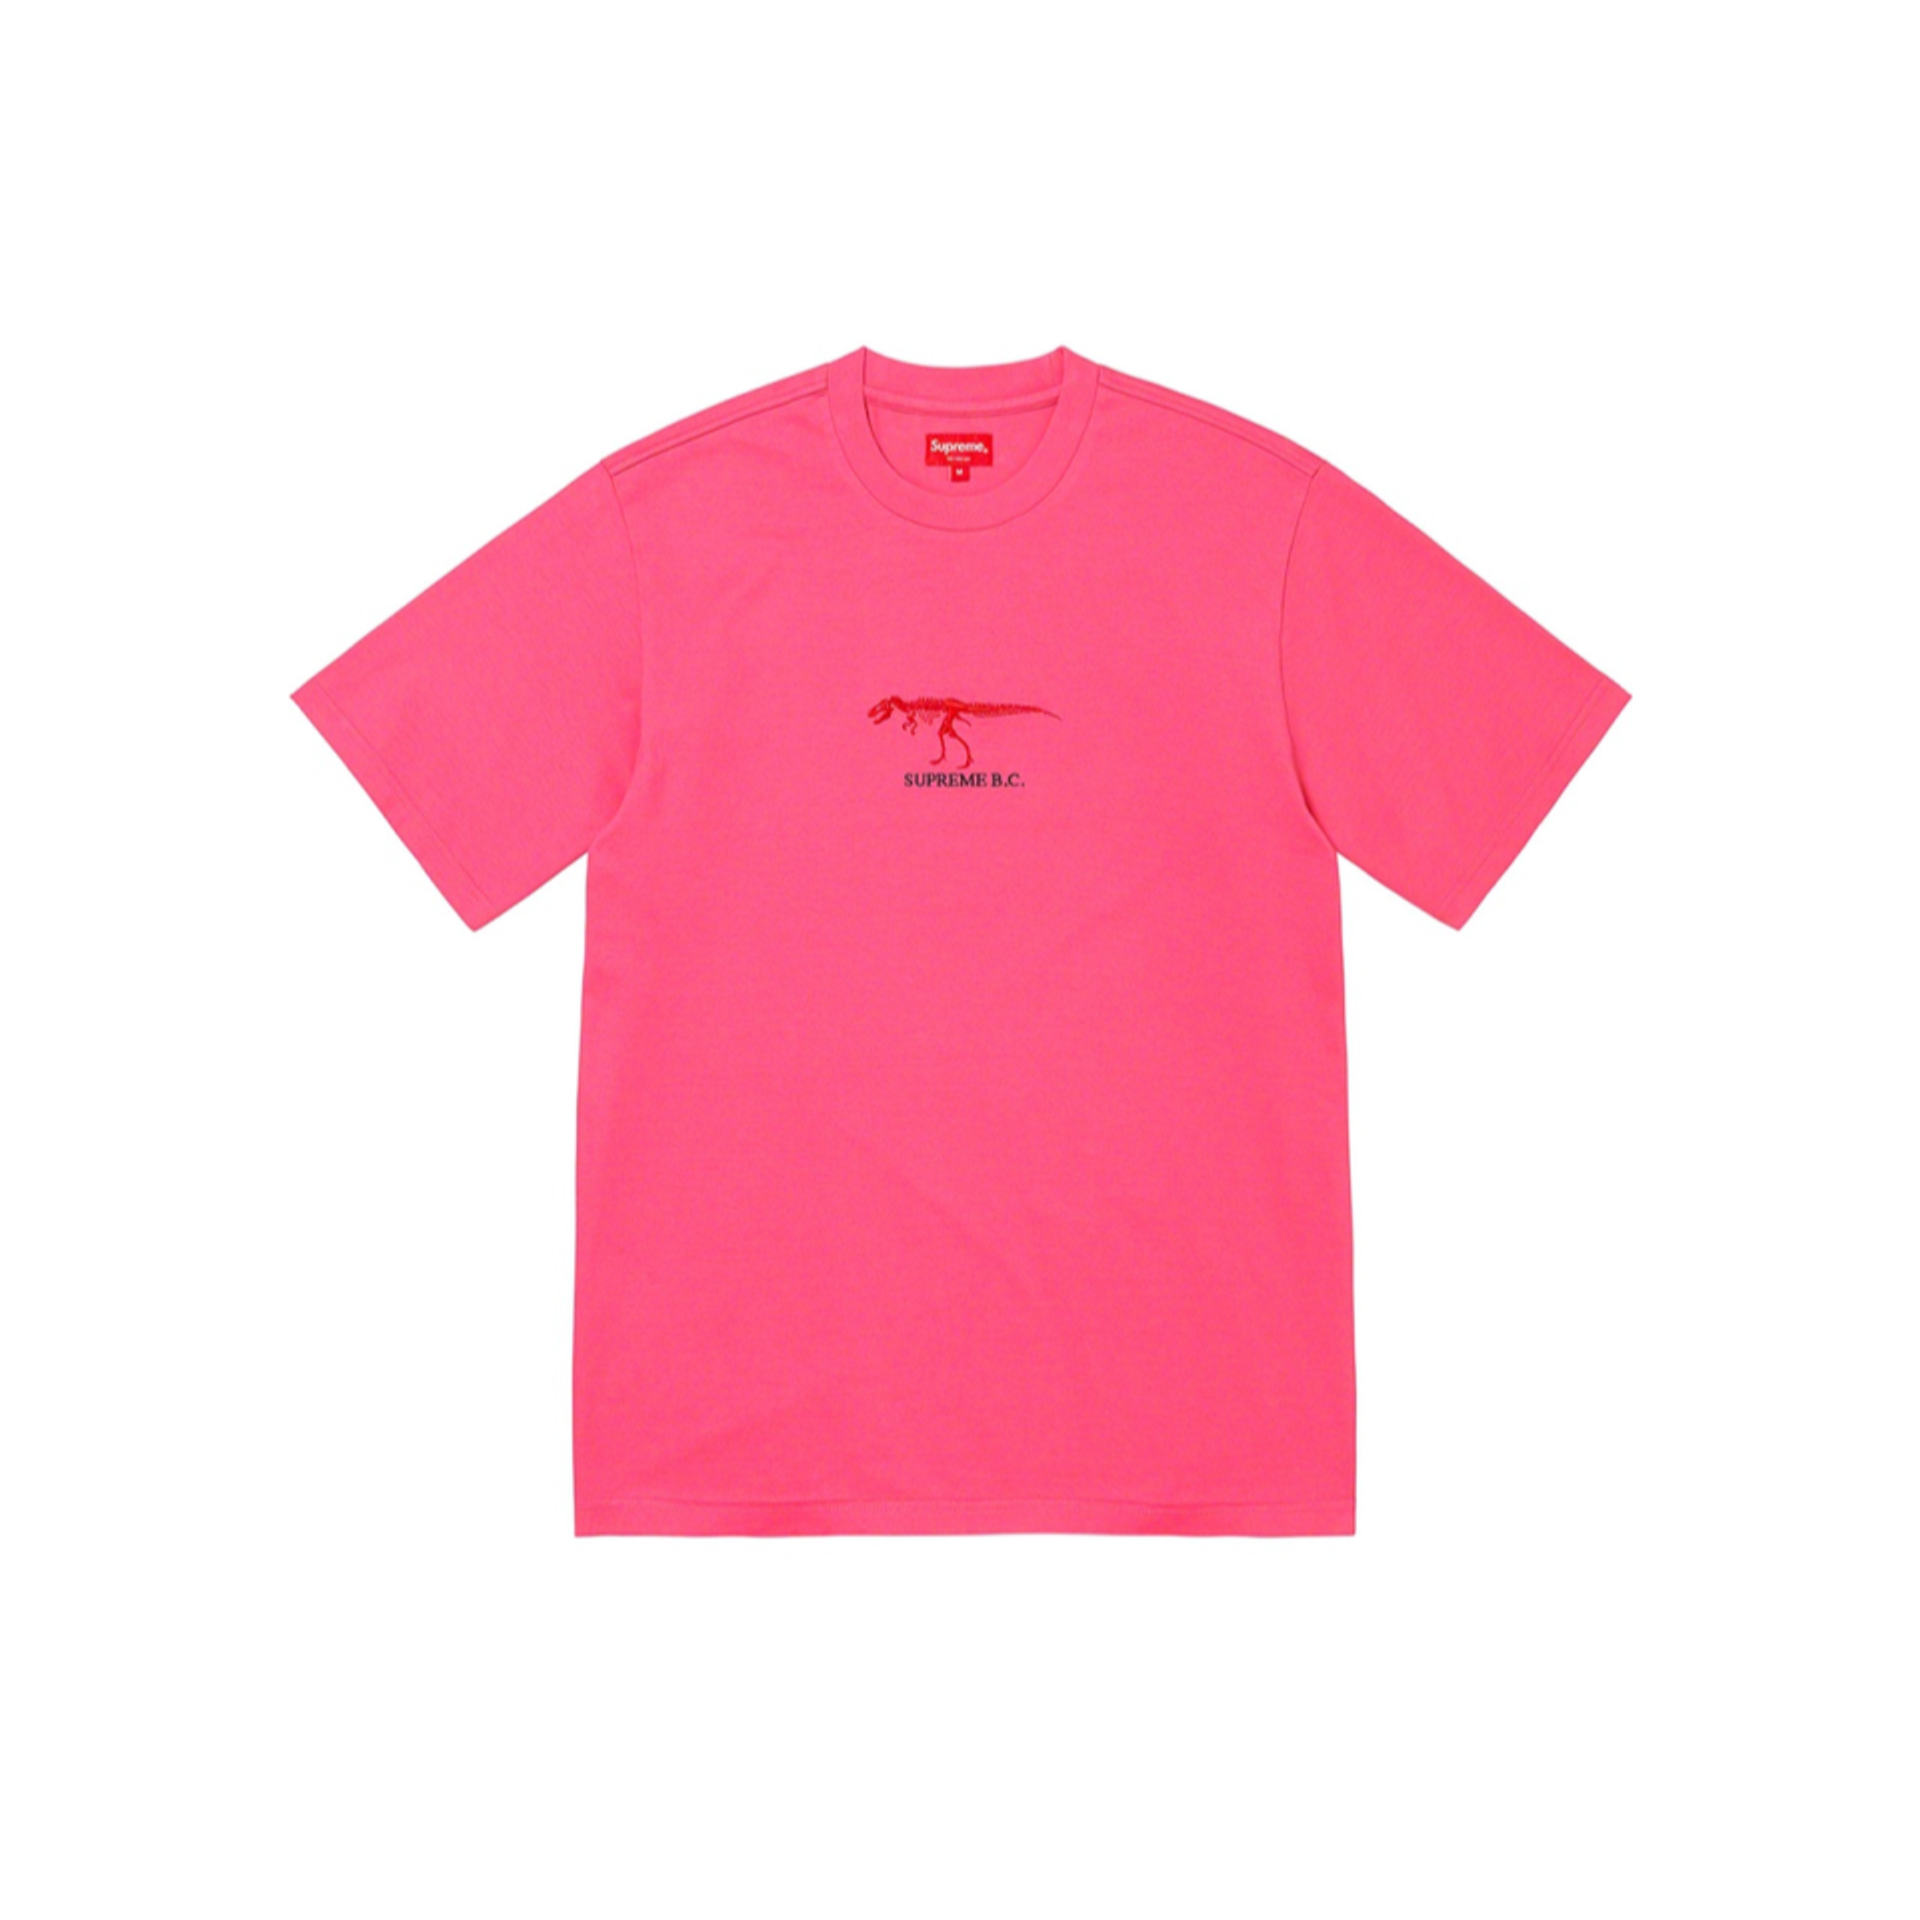 Supreme B.C. Short-Sleeve Top 'Bright Pink'